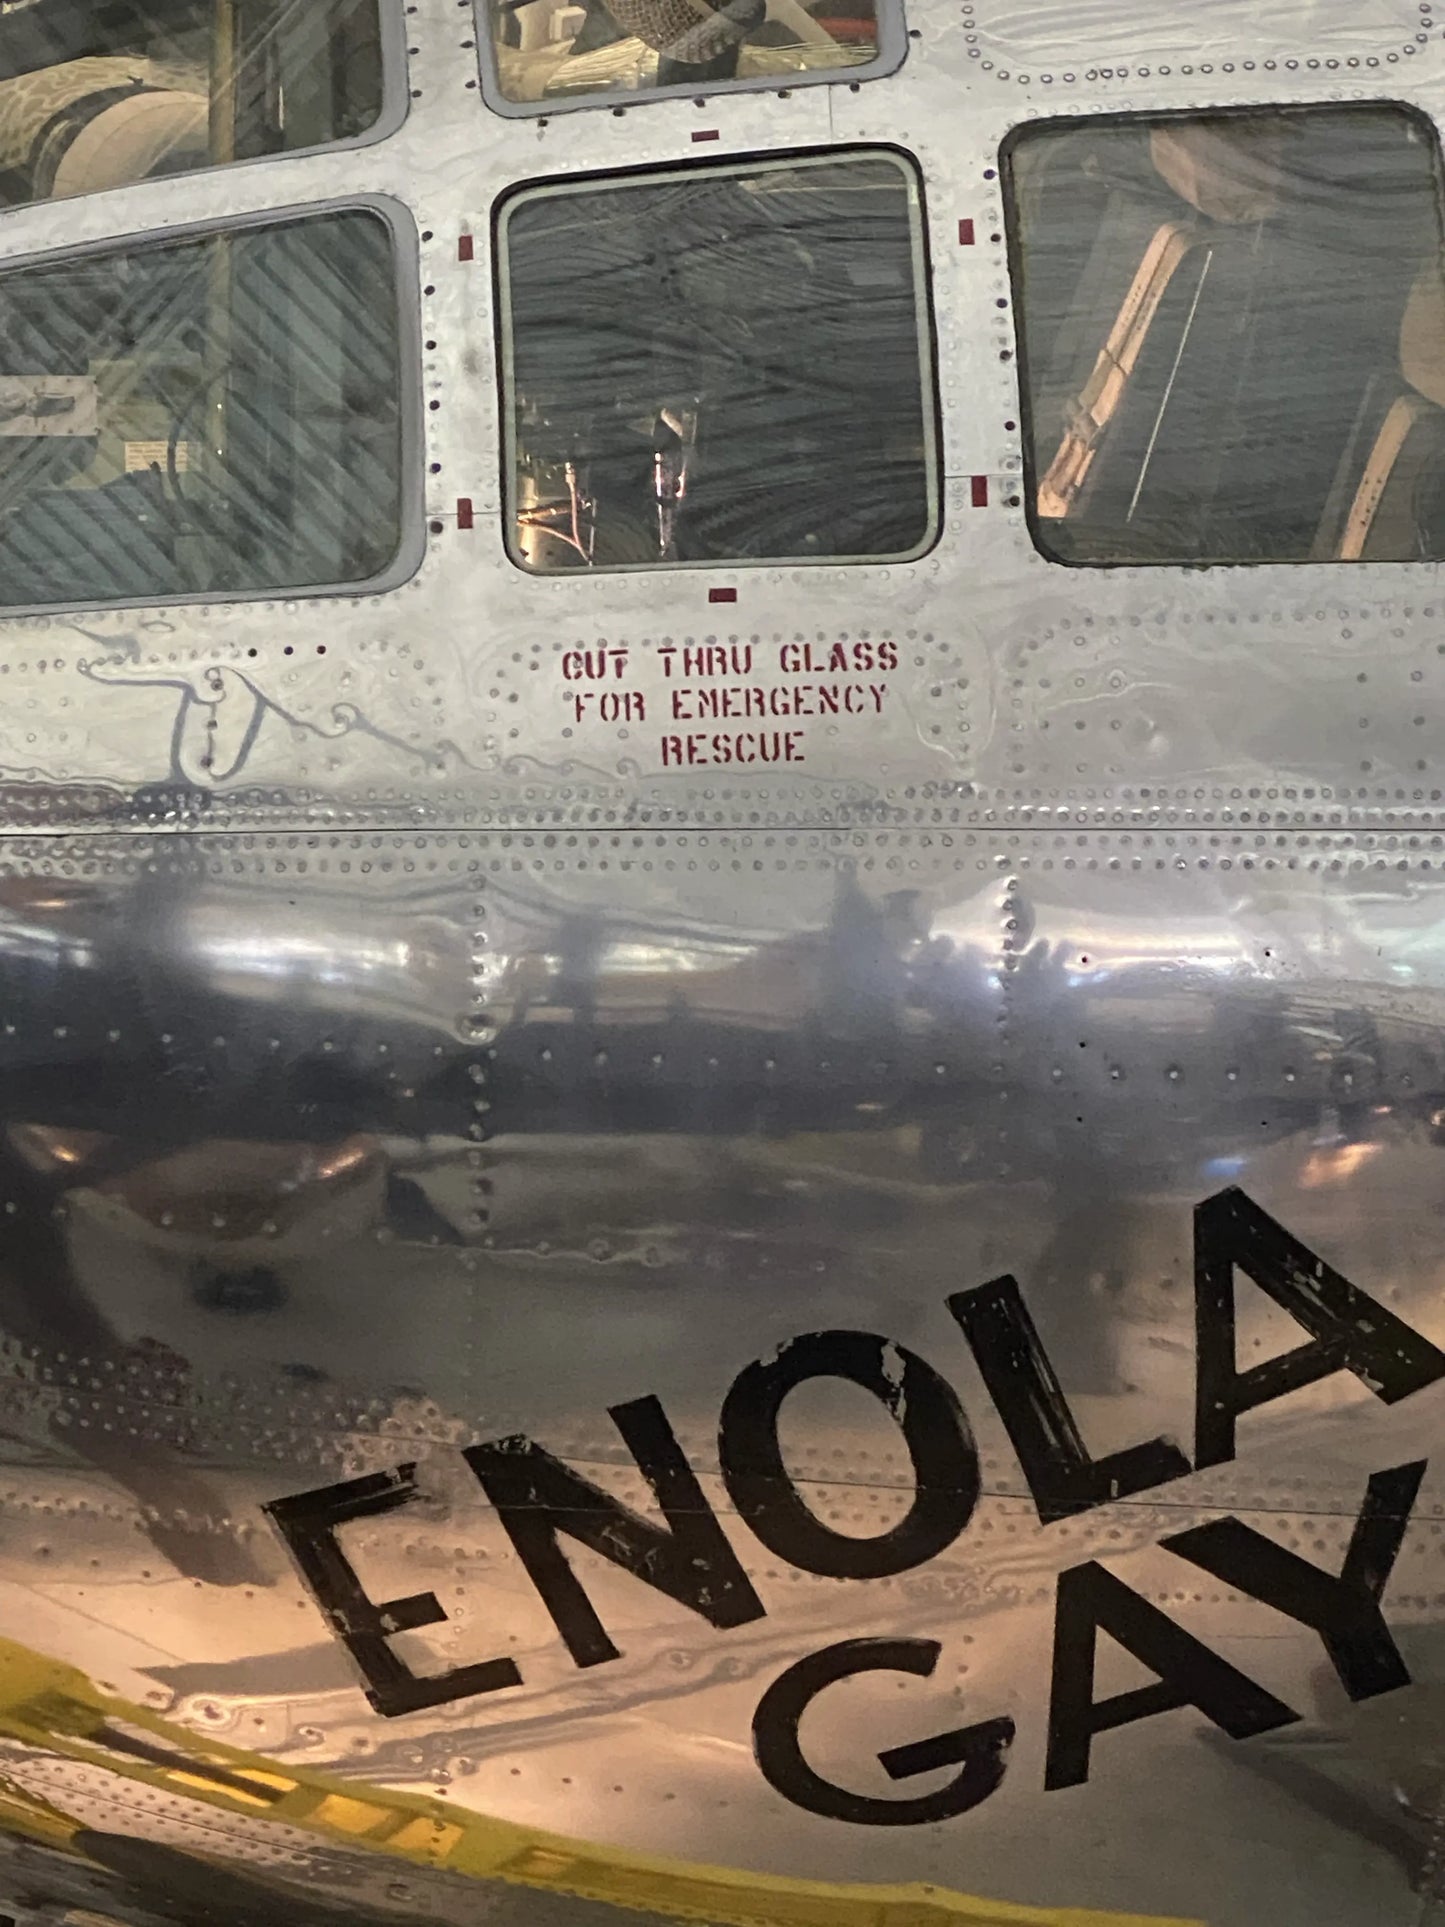 Enola Gay print signed by pilot Col. Paul Tibbets, navigator Capt. Theodore "Dutch" Van Kirk, and bombardier Maj. Thomas Ferebee — Framed